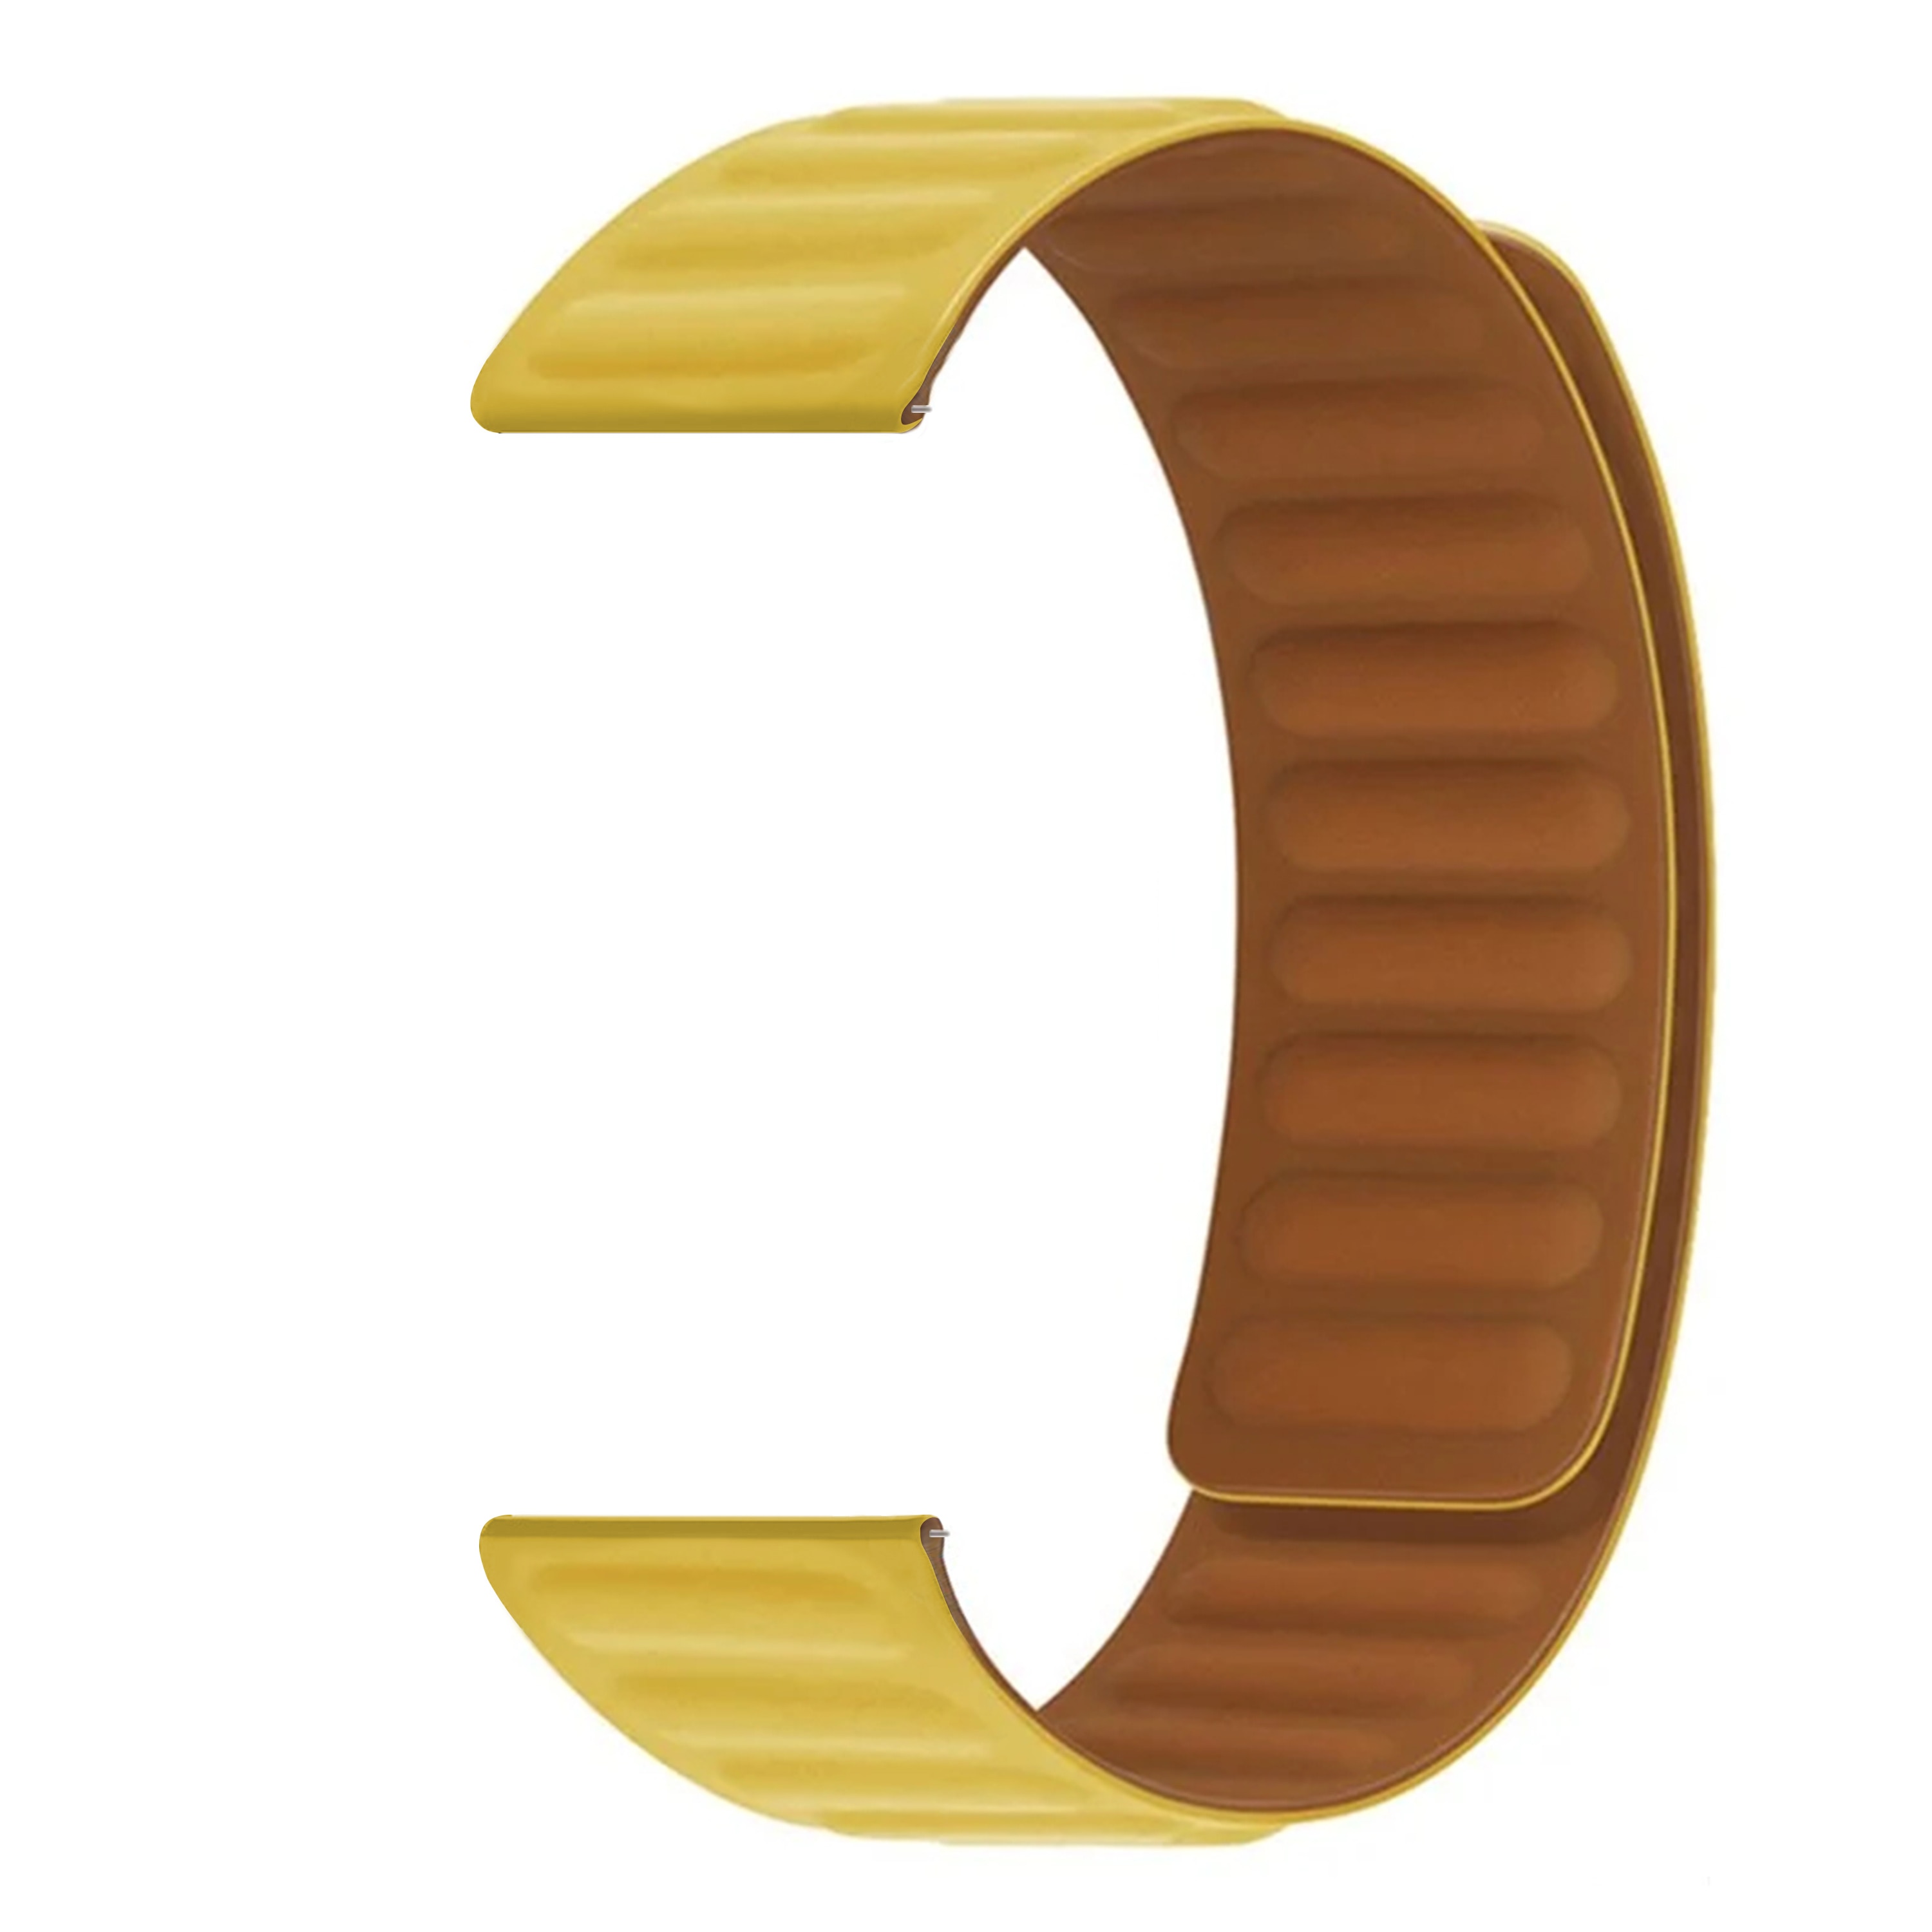 Suunto 9 Peak Magnetische Armband aus Silikon gelb